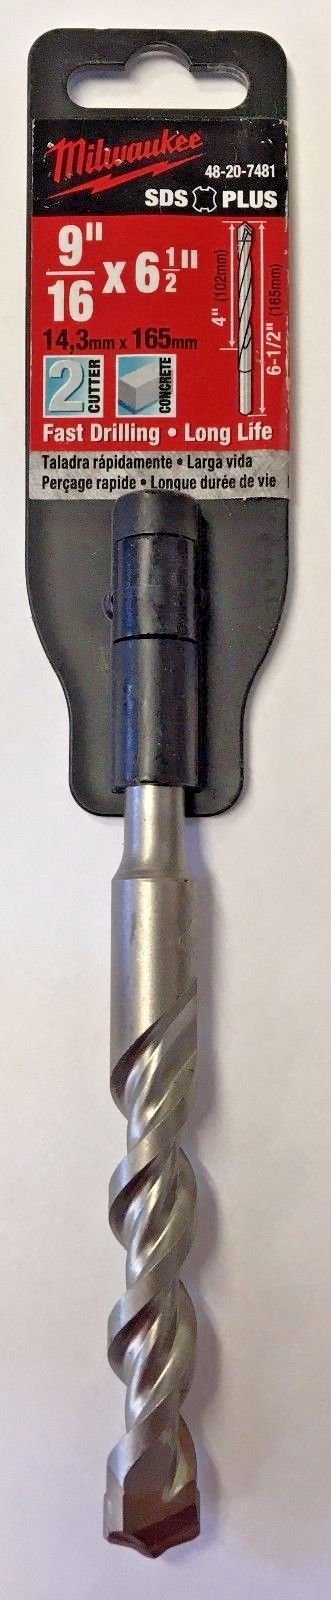 Milwaukee 48-20-7481 9/16" x 4" x 6-1/2" SDS Plus Rotary Hammer Drill Bit